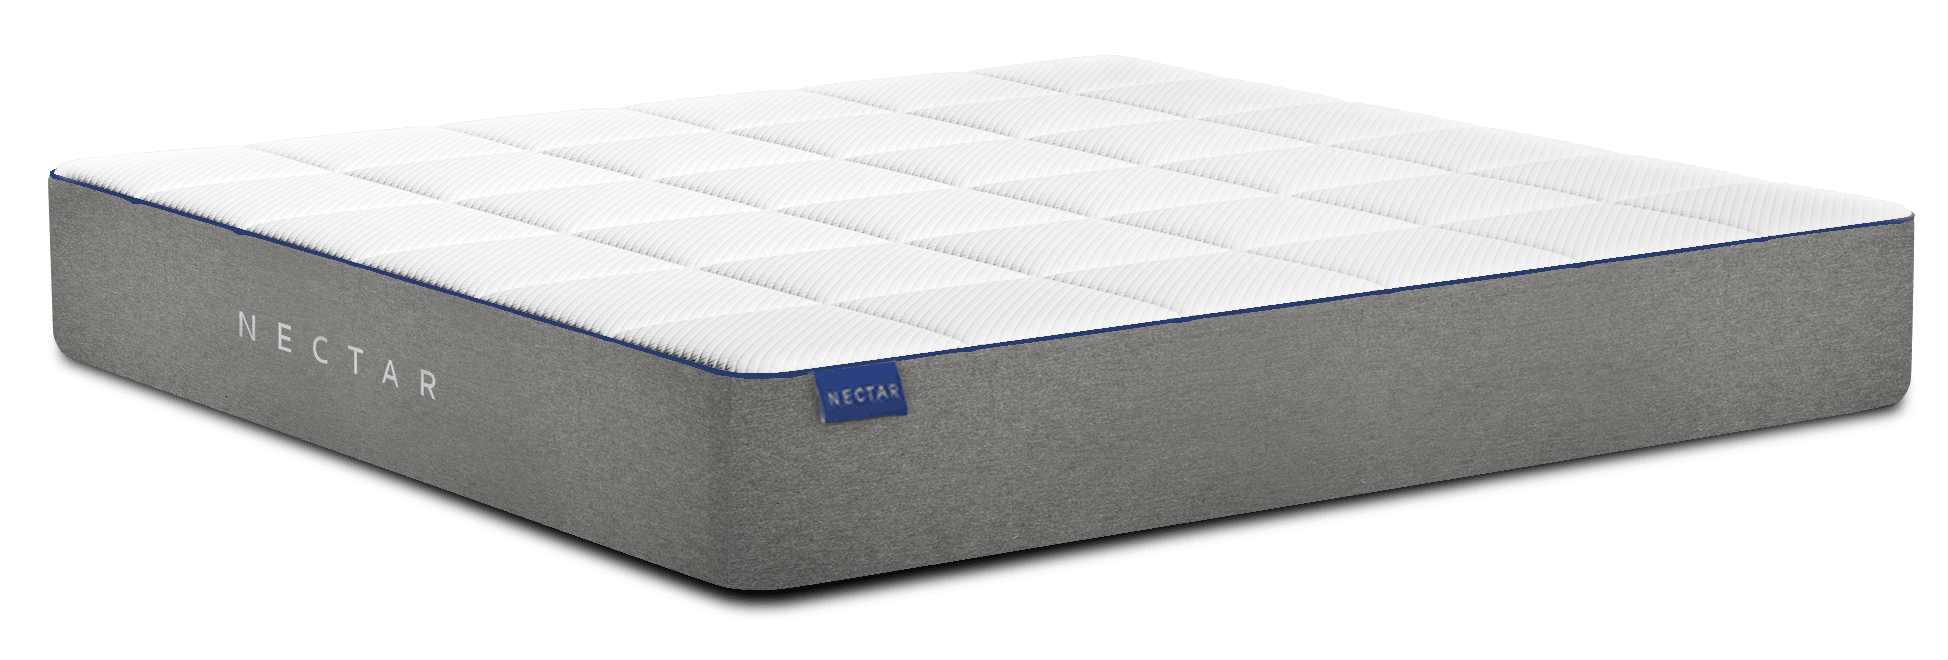 nectar mattress foam density